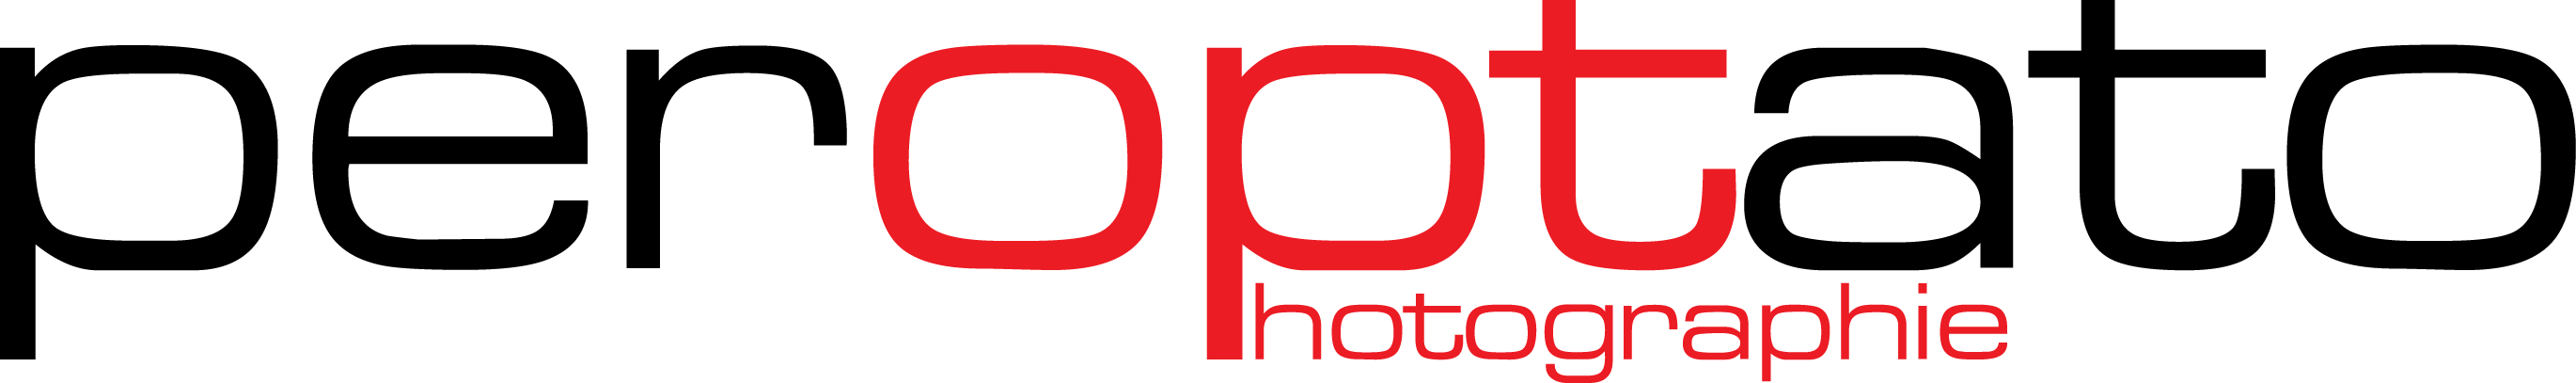 Logo peroptato photographie